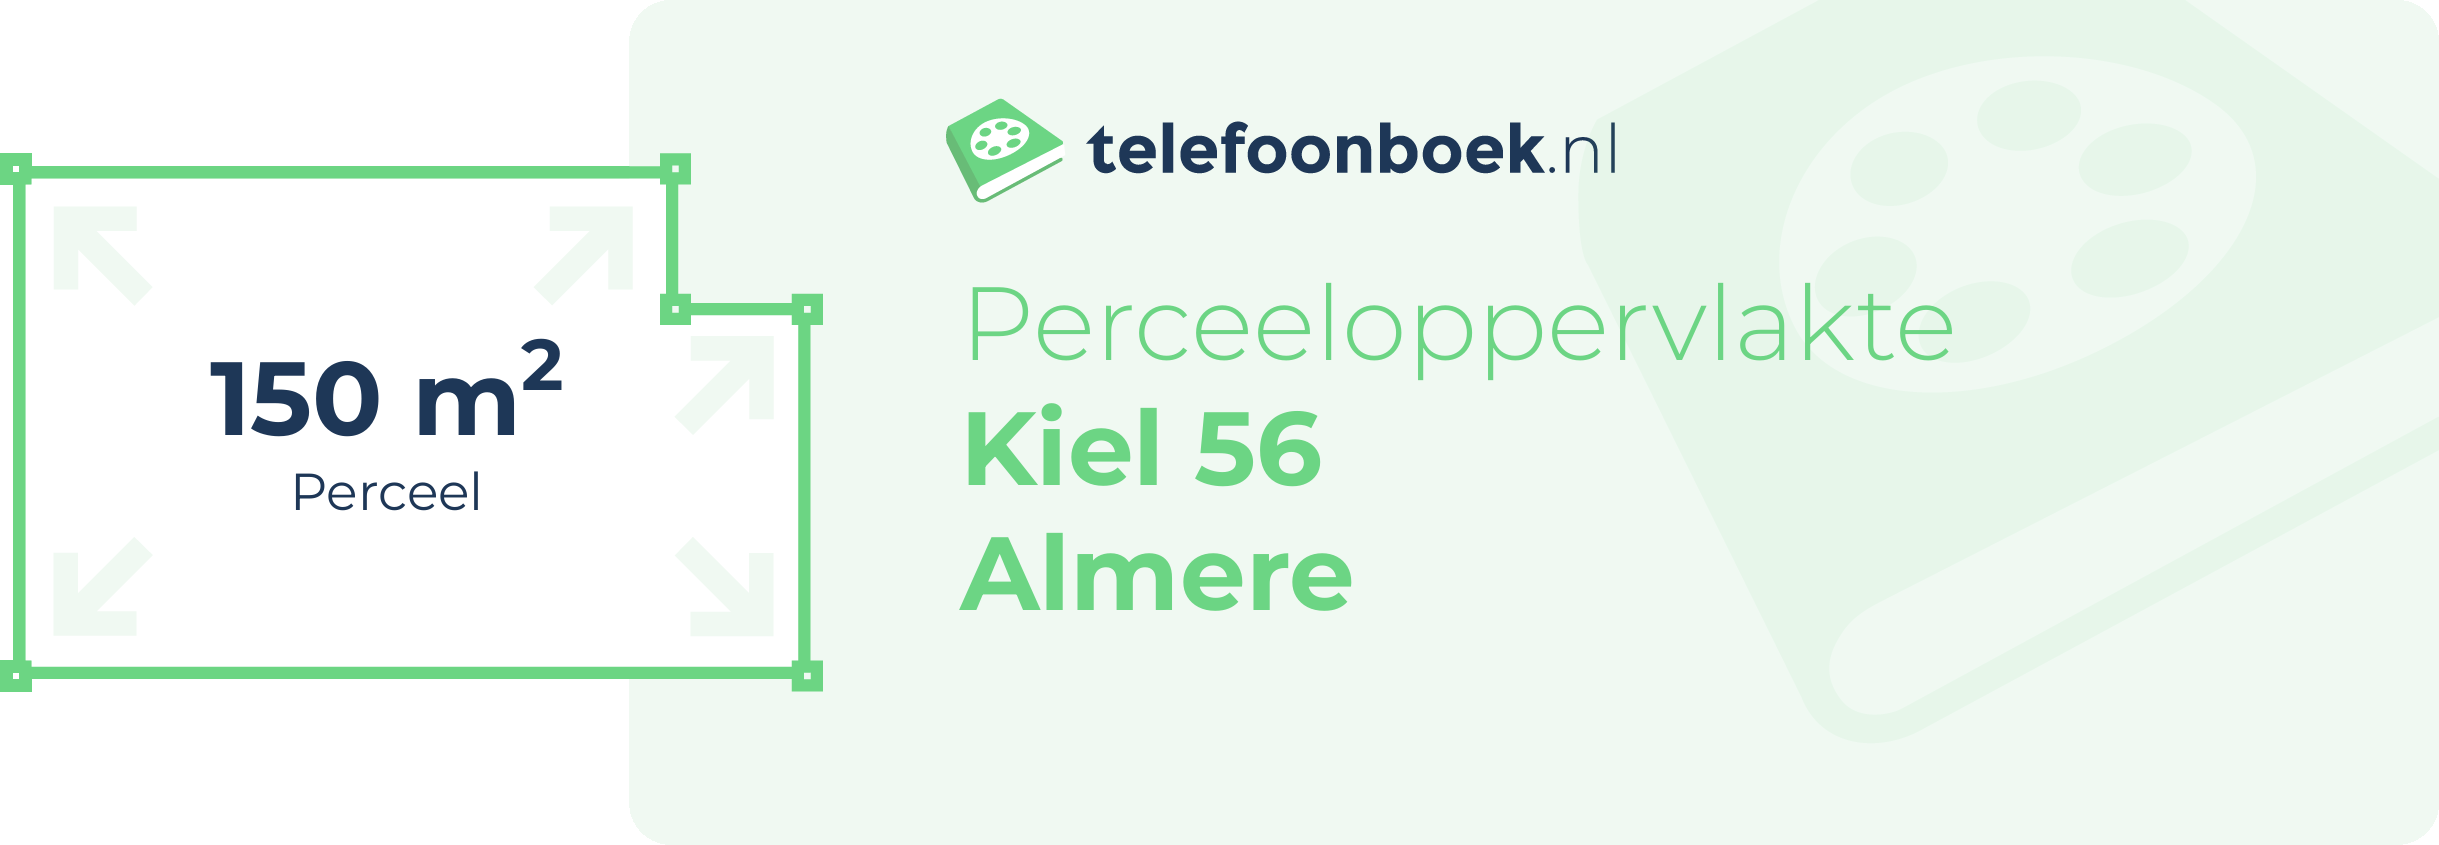 Perceeloppervlakte Kiel 56 Almere